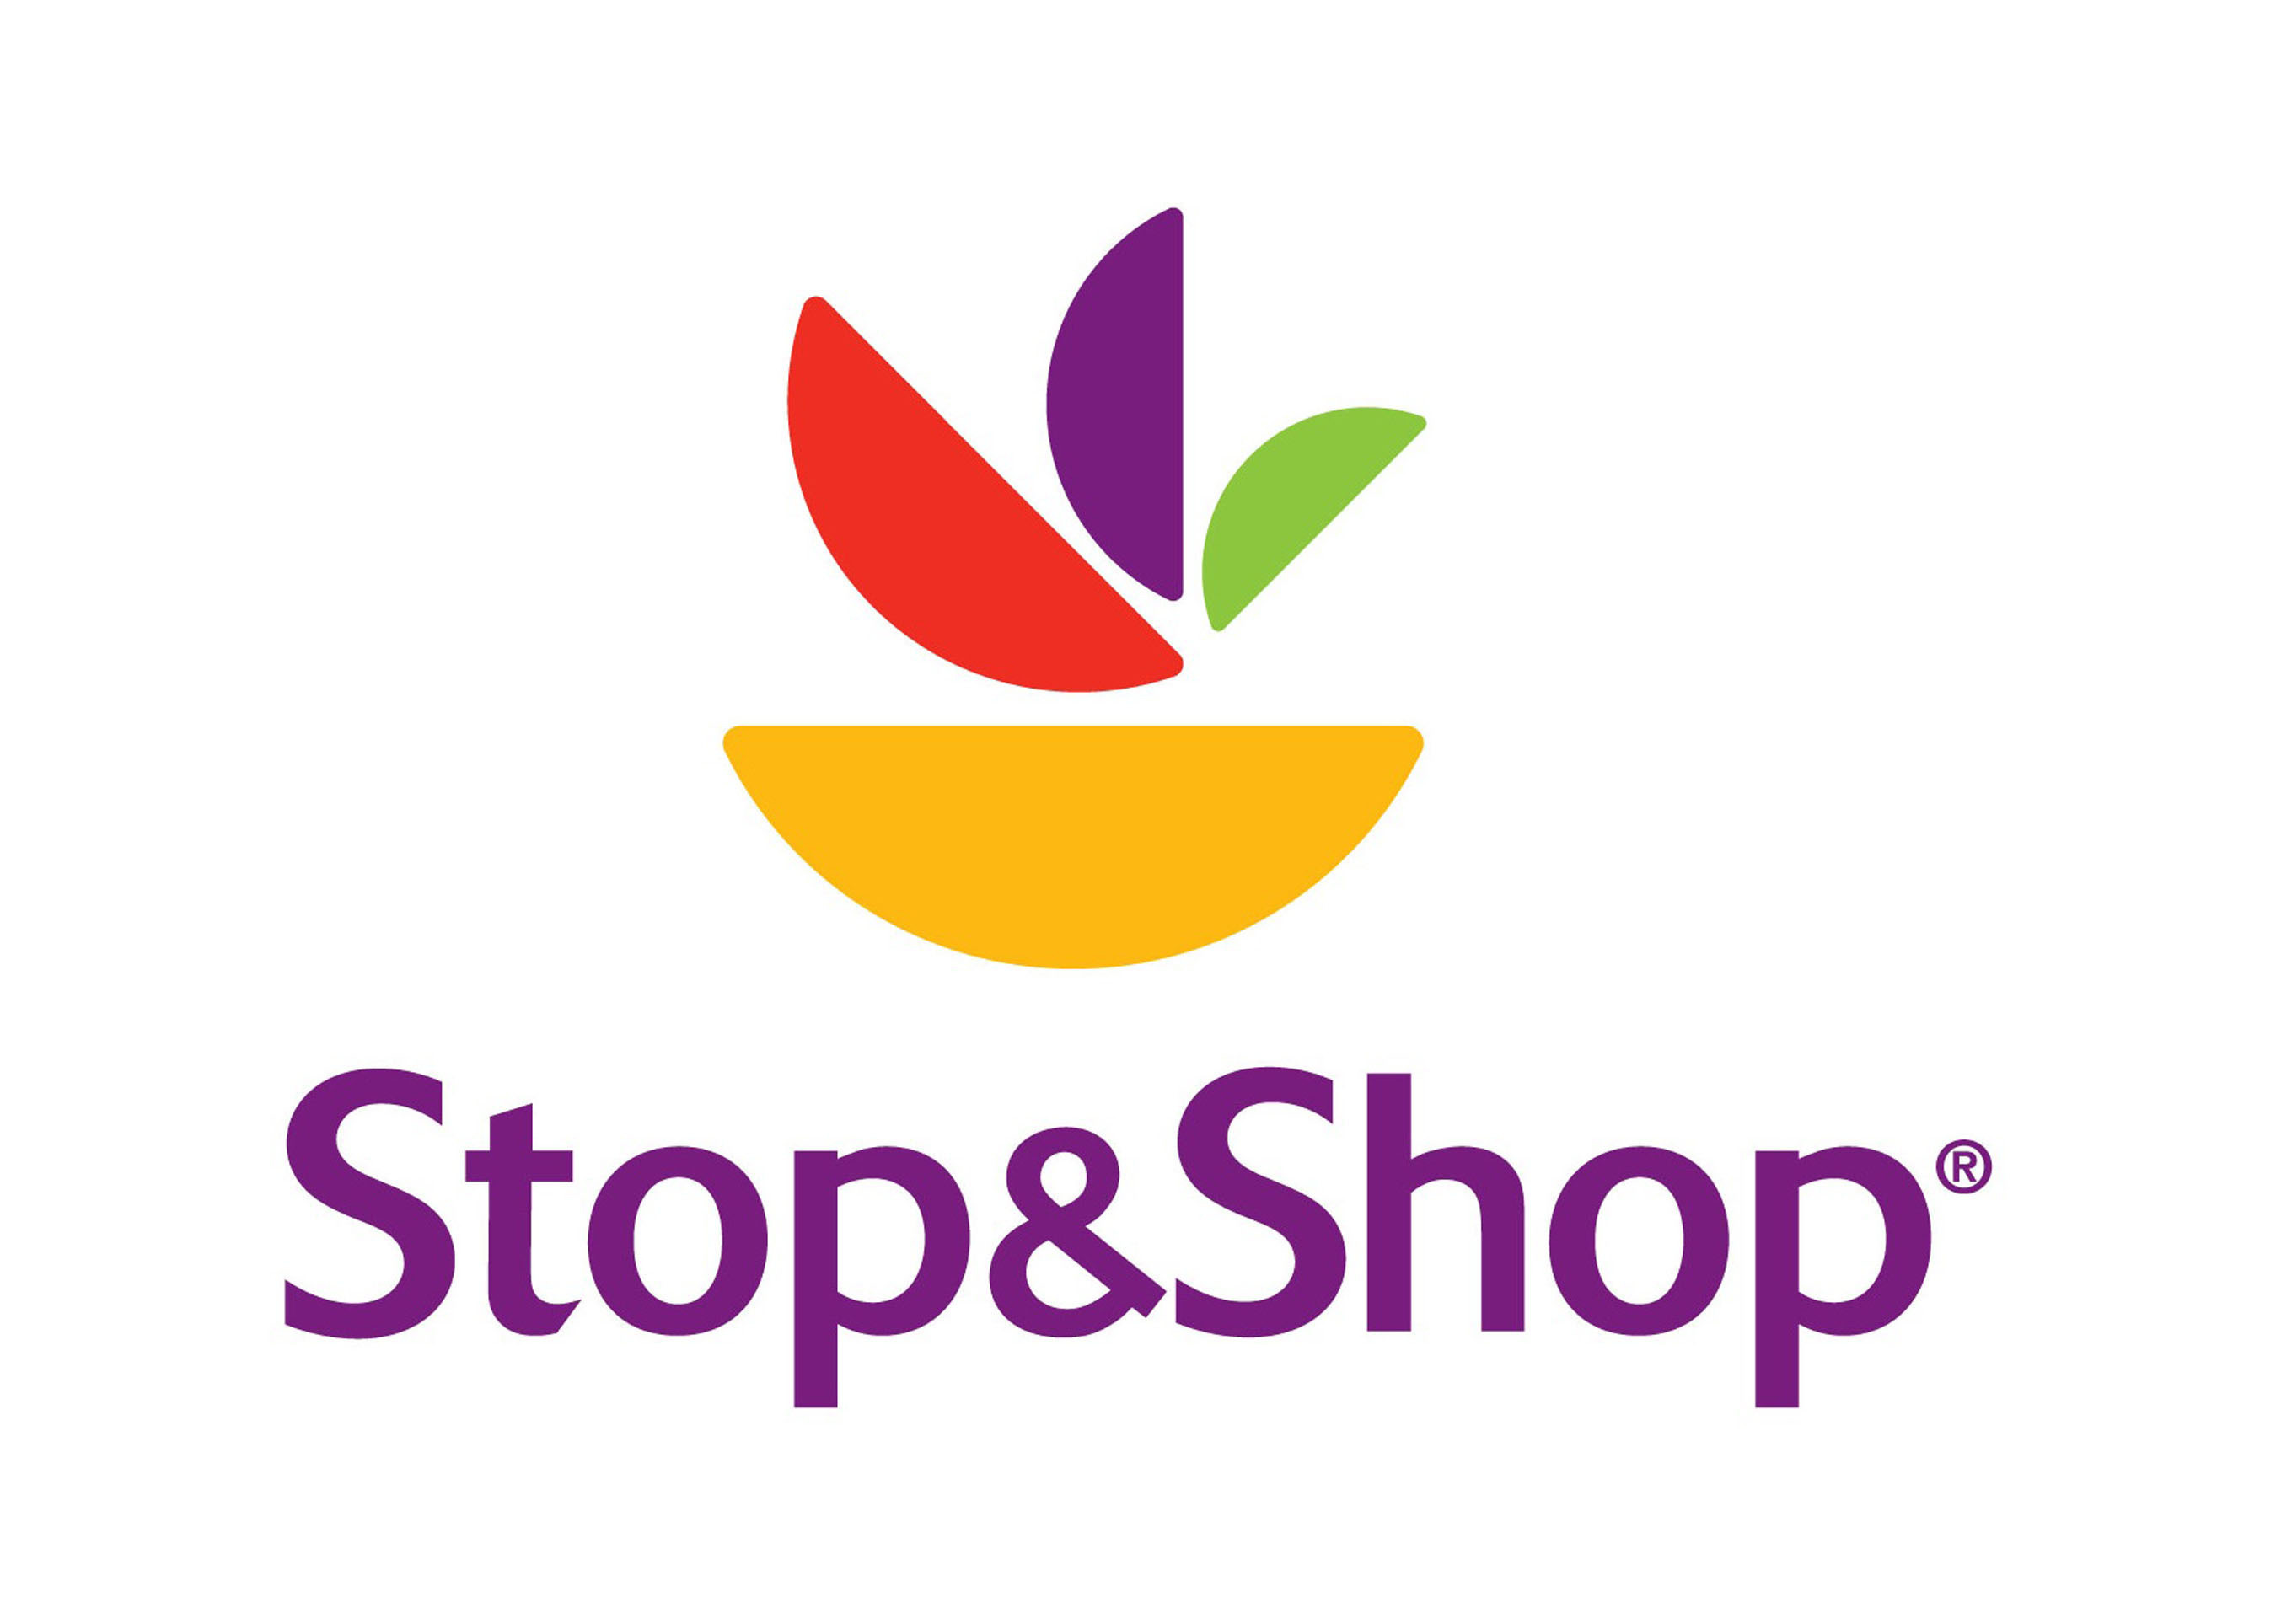 Stop & Shop logo. (PRNewsFoto/Stop & Shop) (PRNewsFoto/)